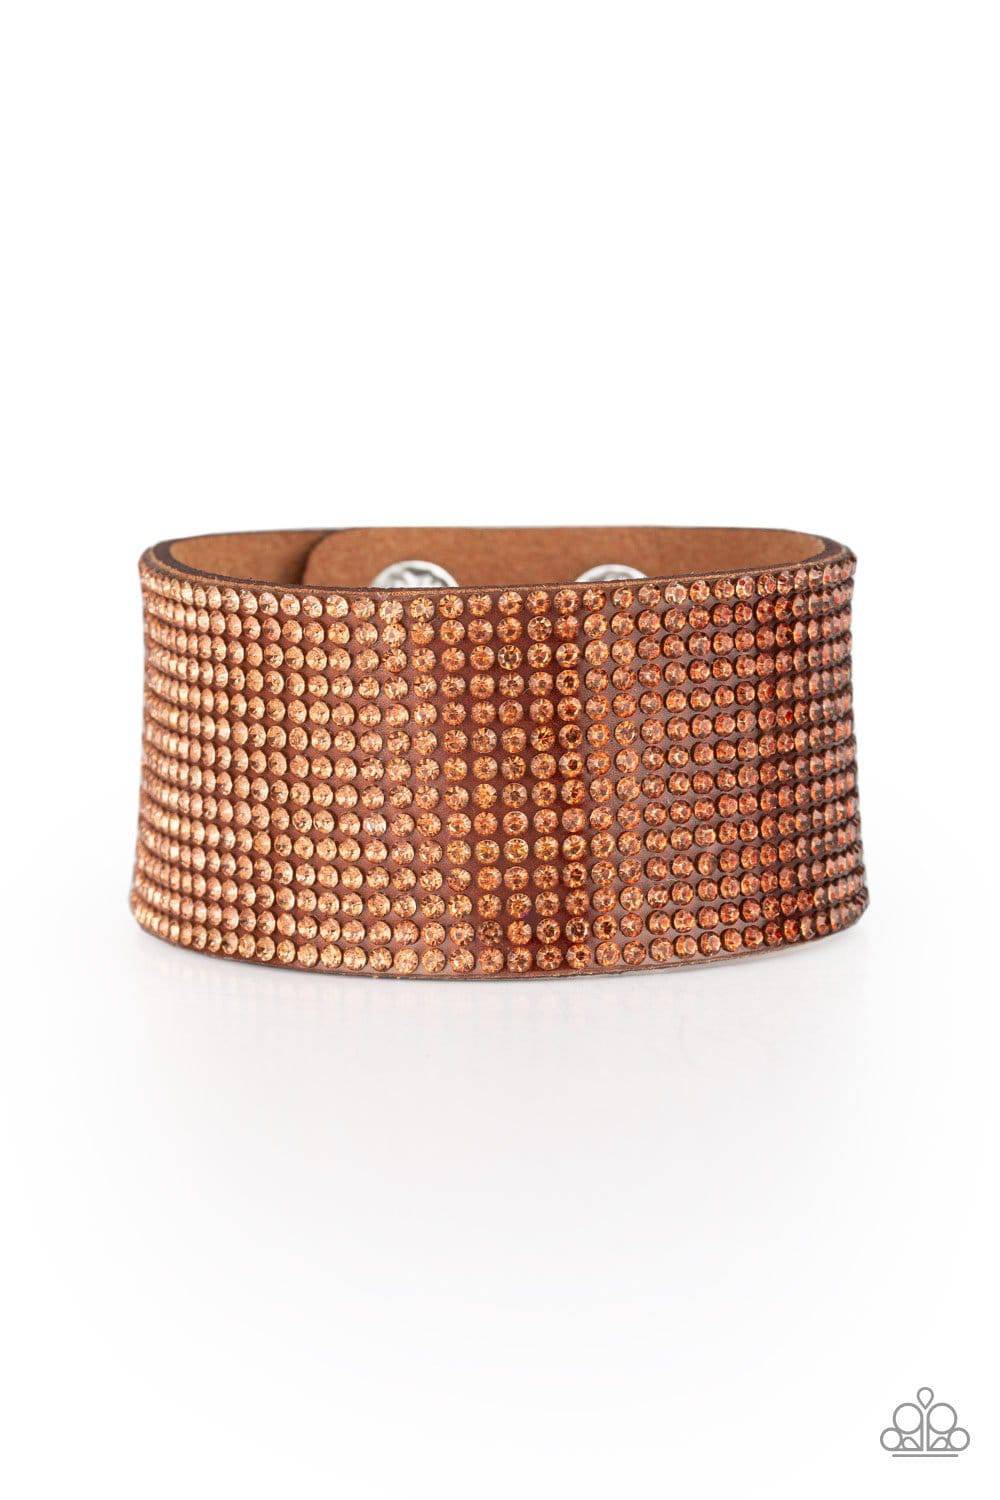 Fade Out - Brown Rhinestone Wrap Bracelet - Paparazzi Accessories - GlaMarous Titi Jewels